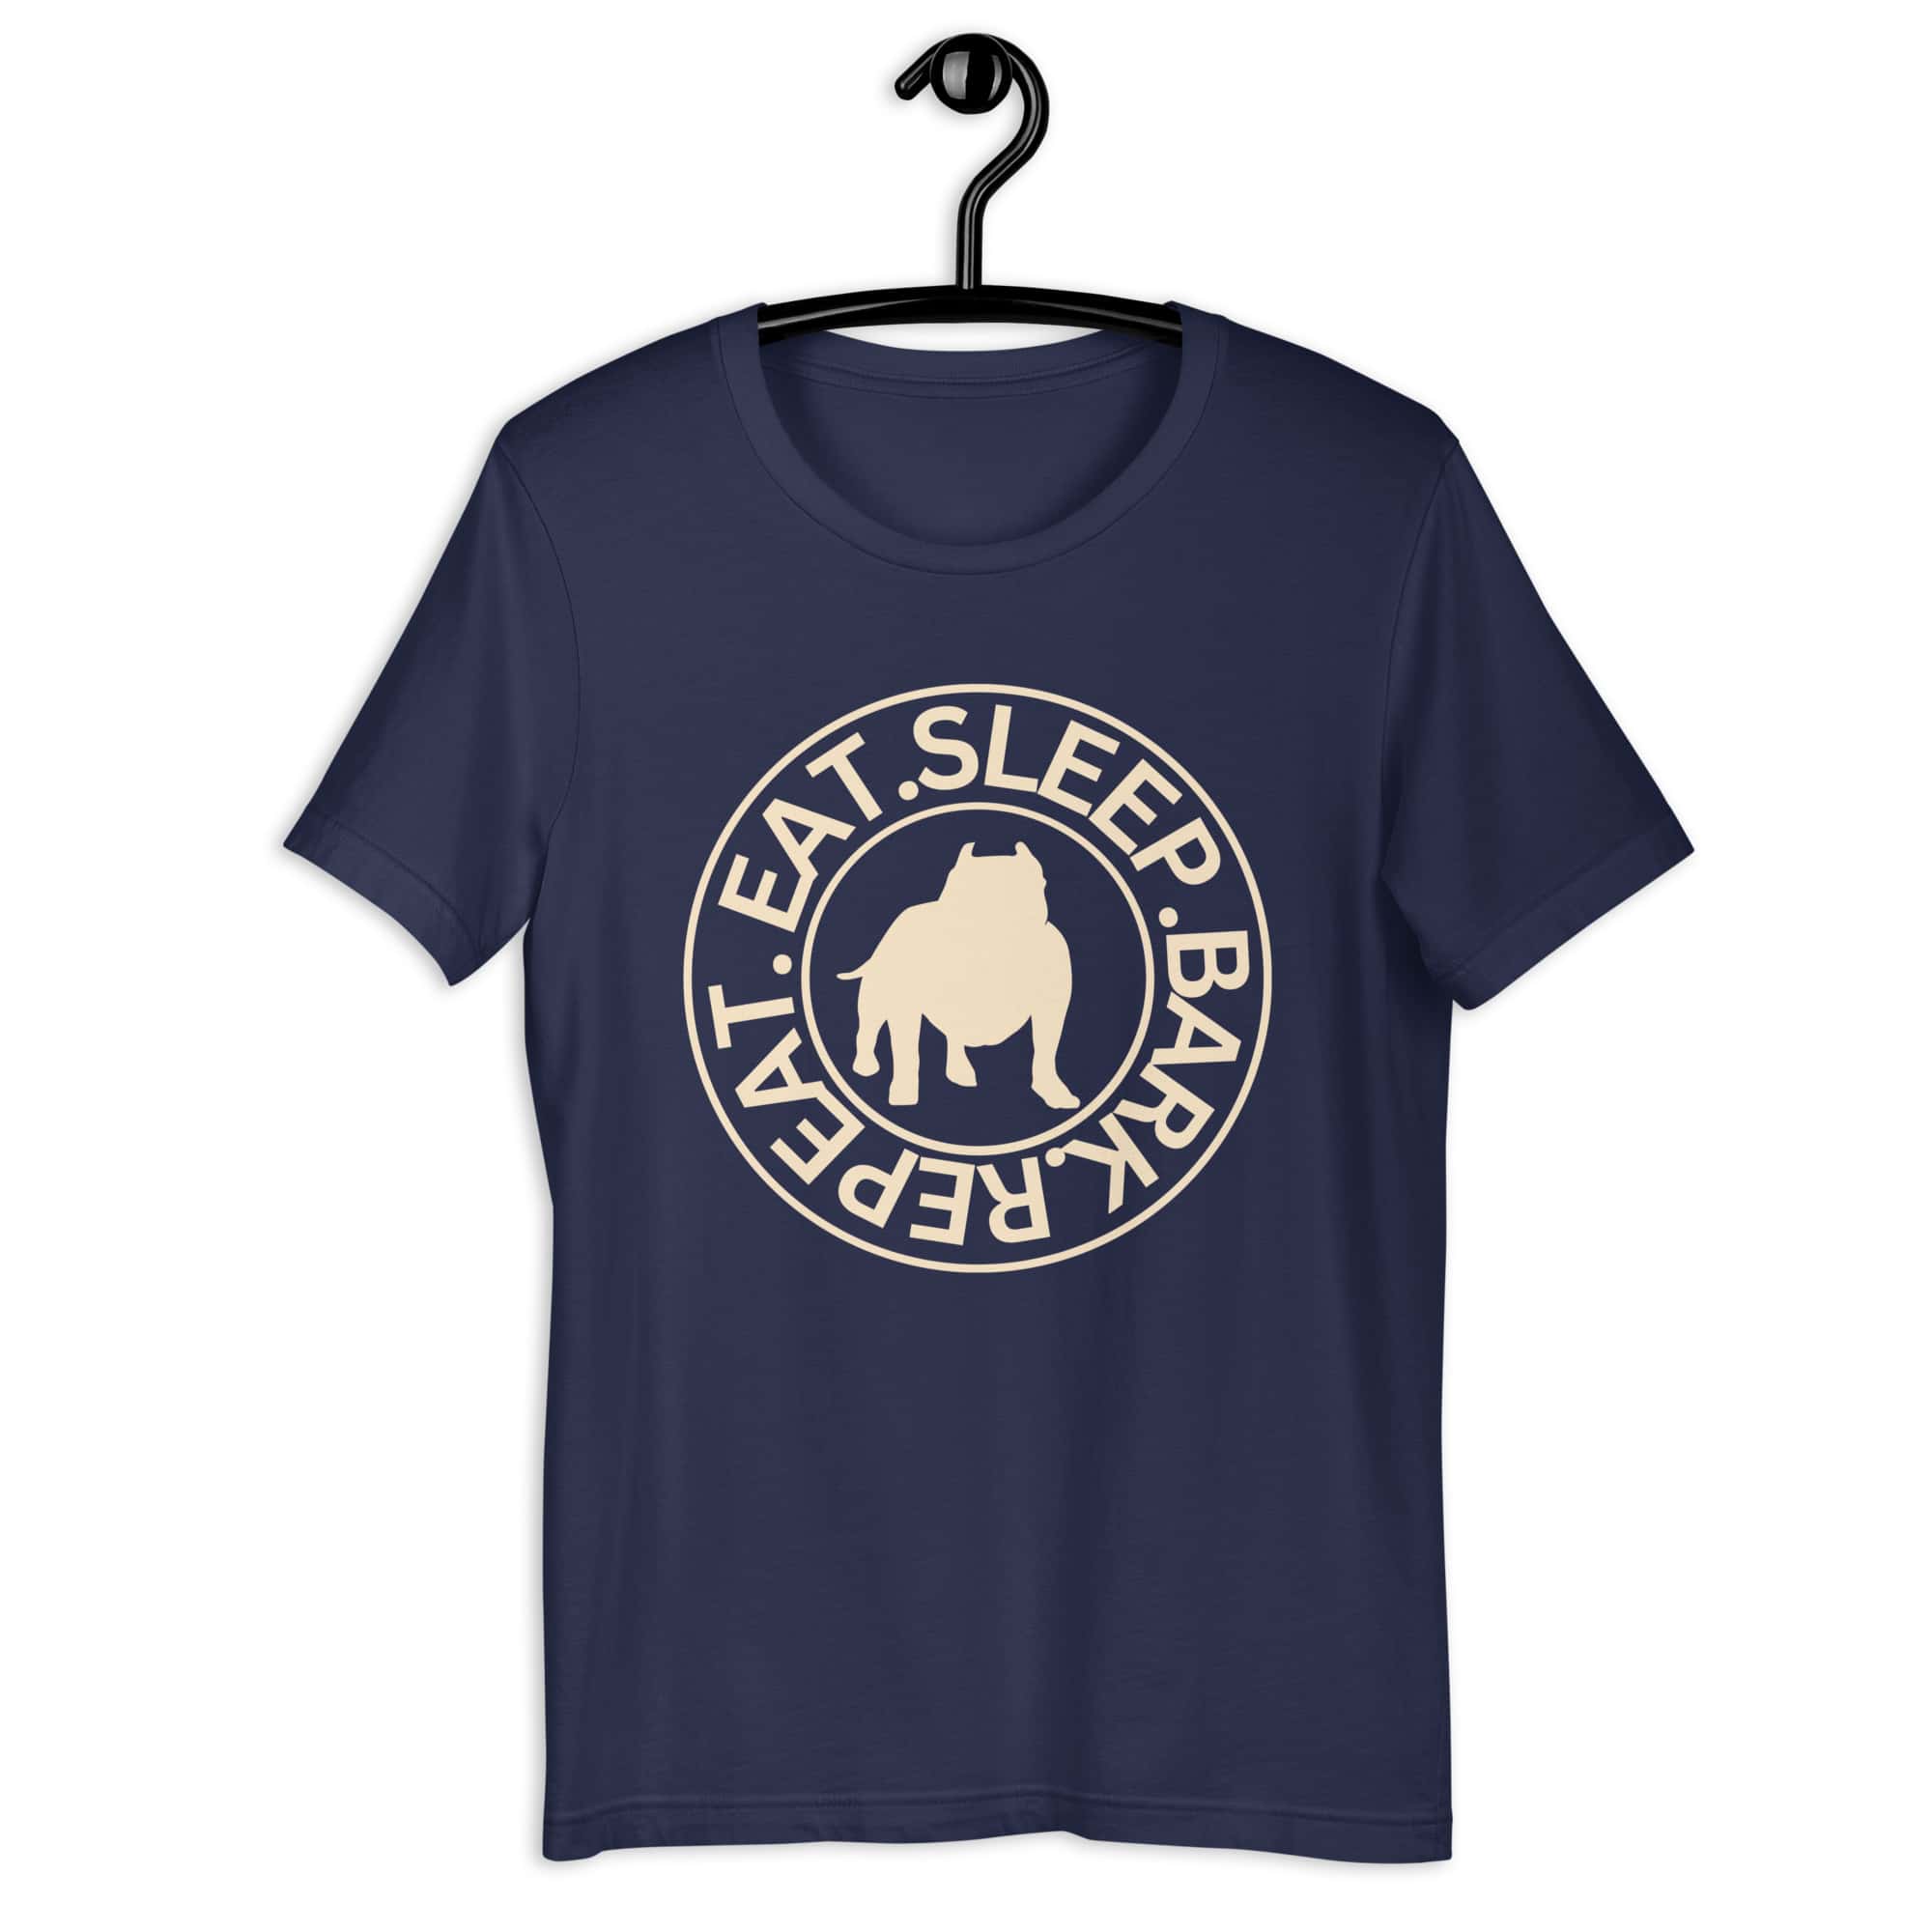 Eat Sleep Bark Repeat Bulldog Unisex T-Shirt. Navy